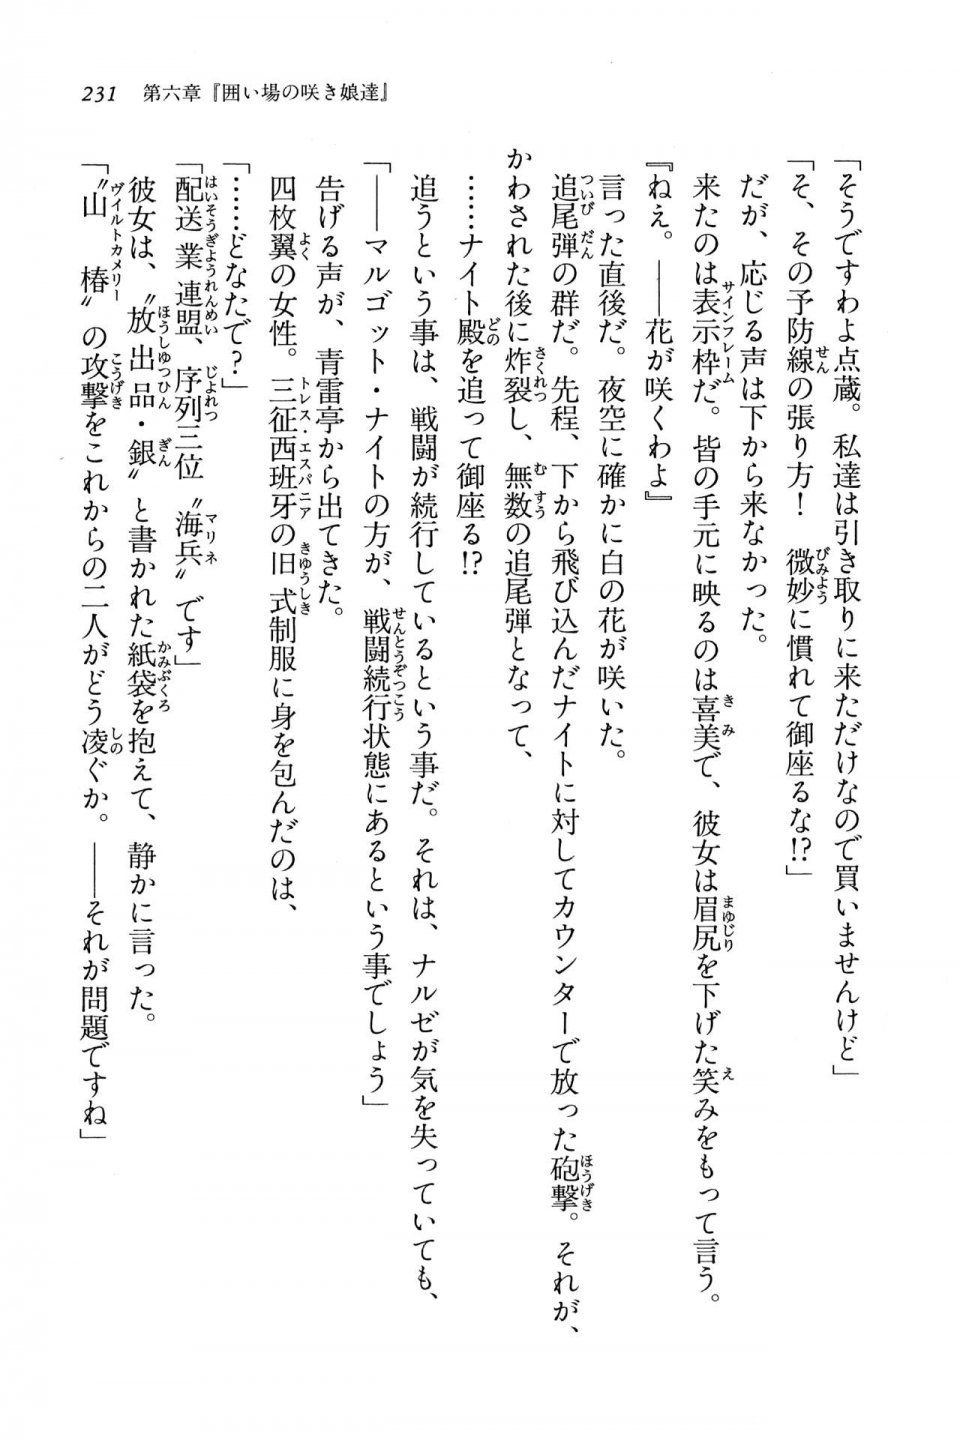 Kyoukai Senjou no Horizon BD Special Mininovel Vol 7(4A) - Photo #235